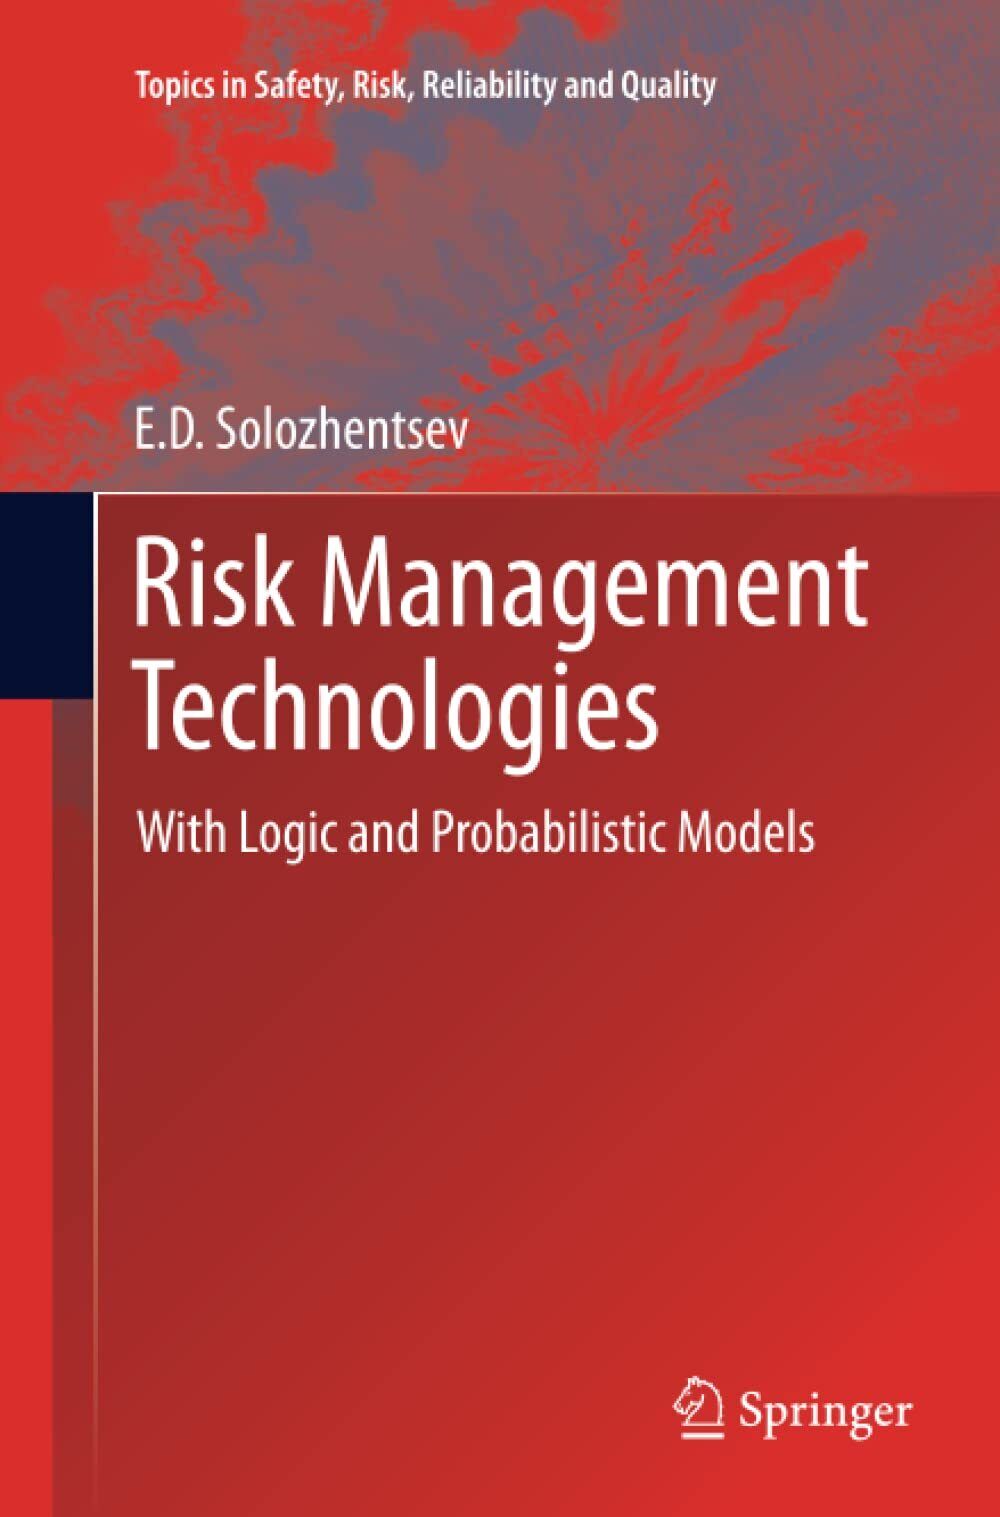 Risk Management Technologies - E. D. Solozhentsev - Springer, 2014